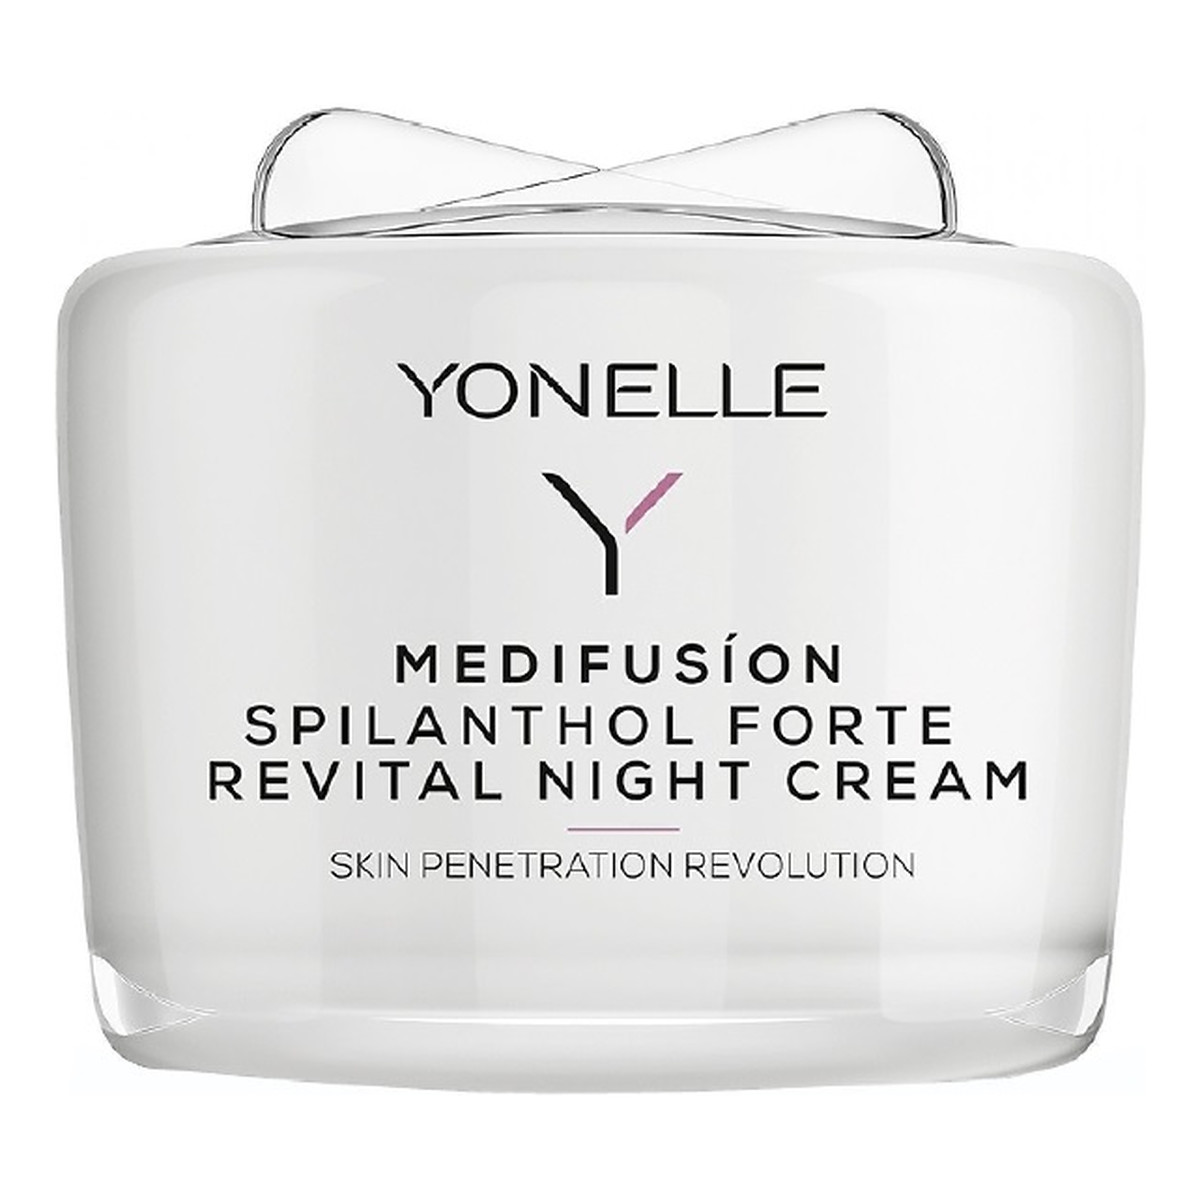 Yonelle Medifusion Spilantol Forte Revital Night Cream rewitalizujący Krem na noc ze spilantolem forte 55ml